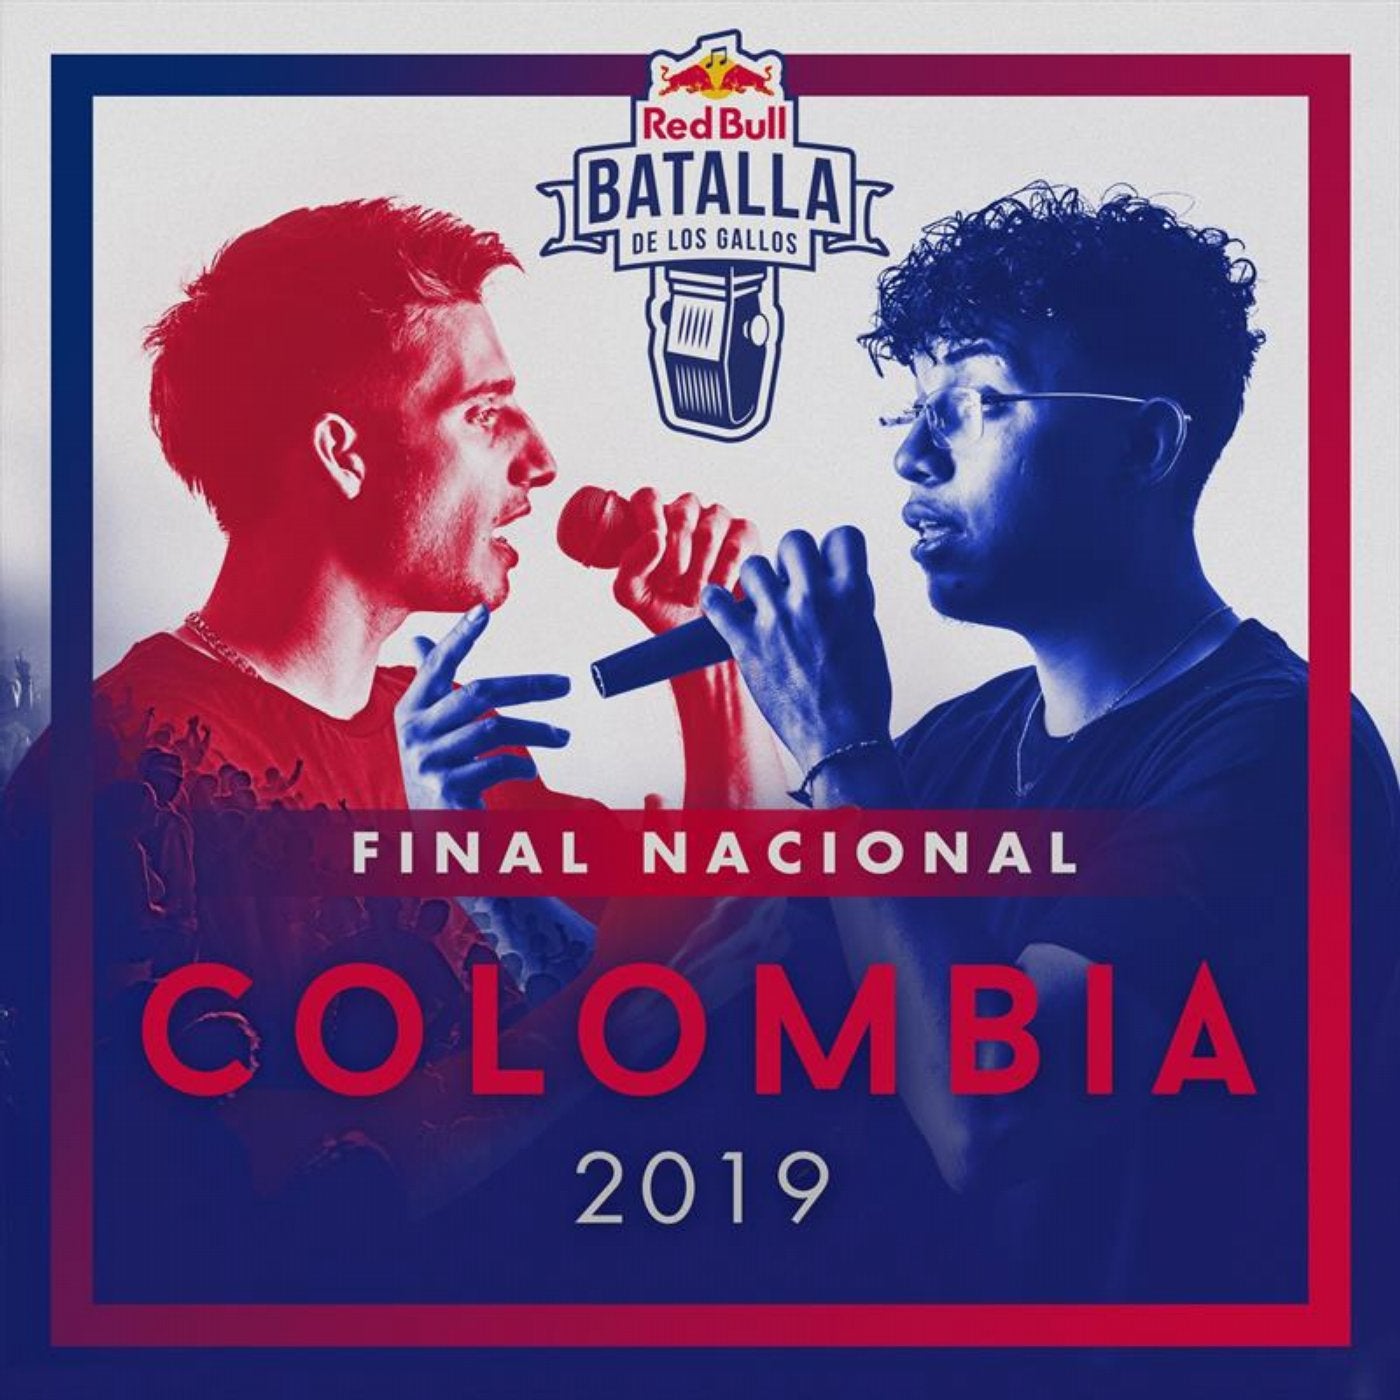 Final Nacional Colombia 2019